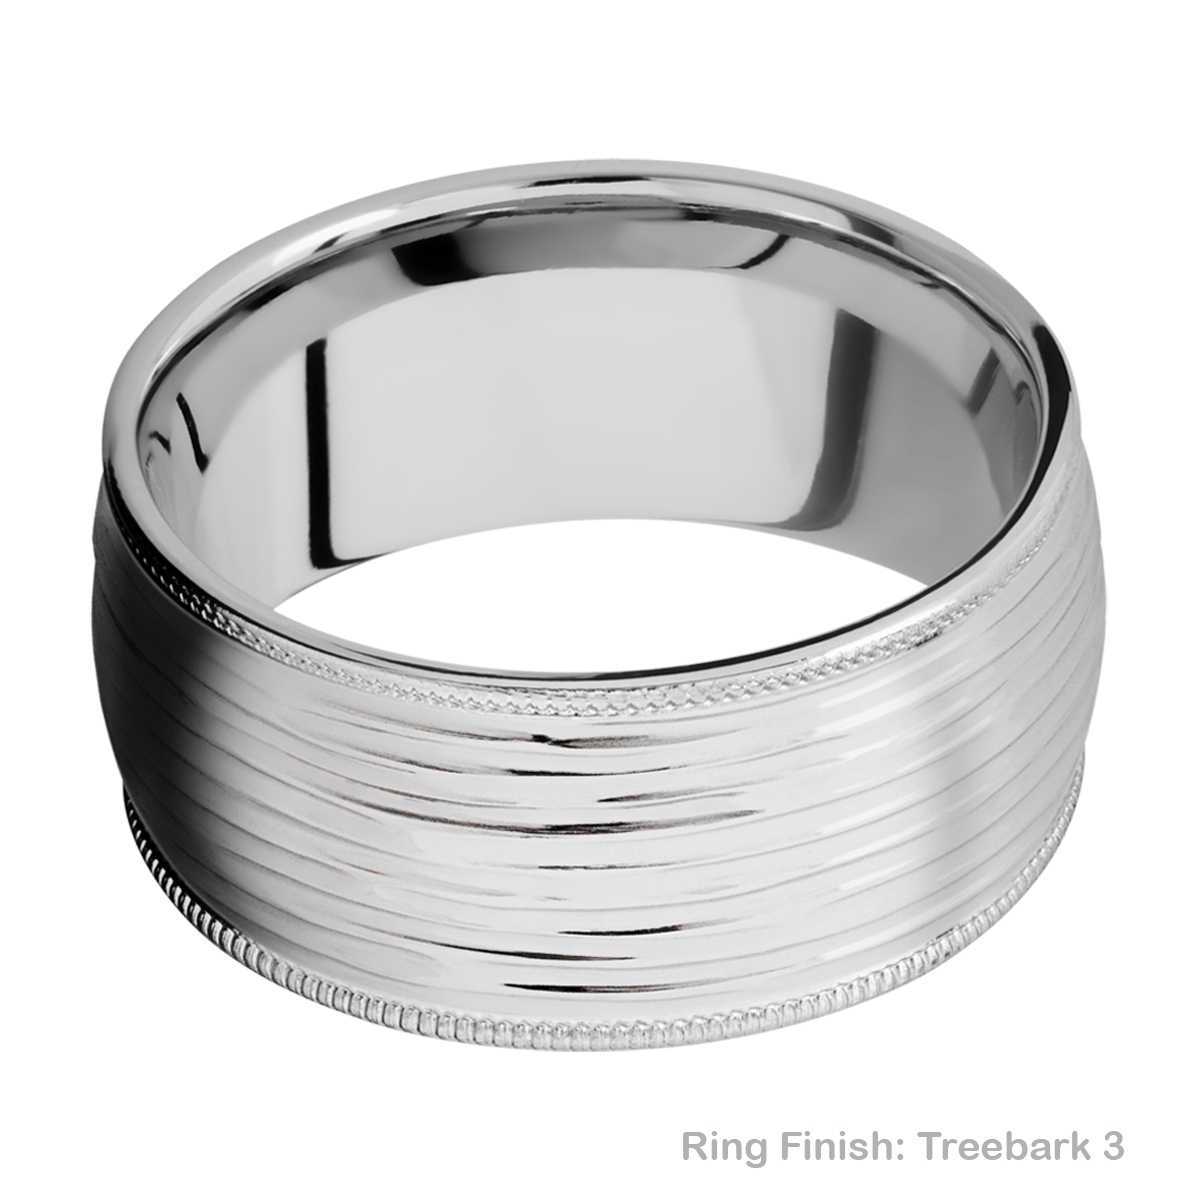 Lashbrook CC10DMIL Cobalt Chrome Wedding Ring or Band